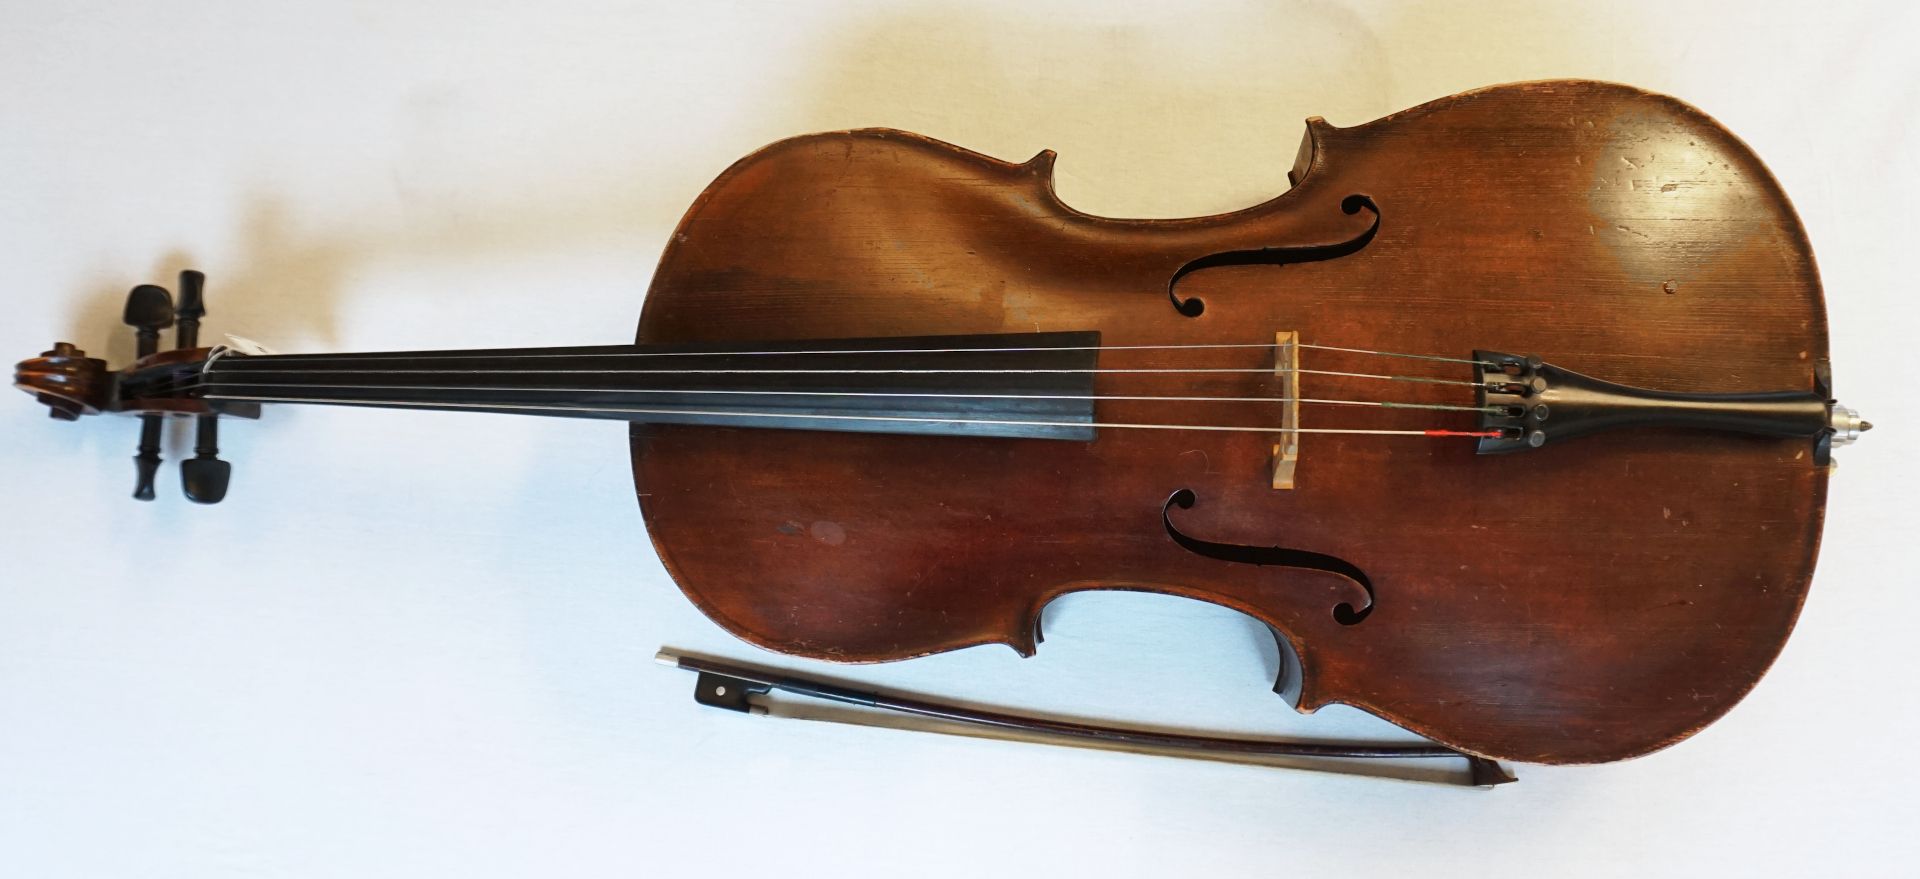 1 Cello ca. L 130cm, mit Bogen starke Asp./ber.